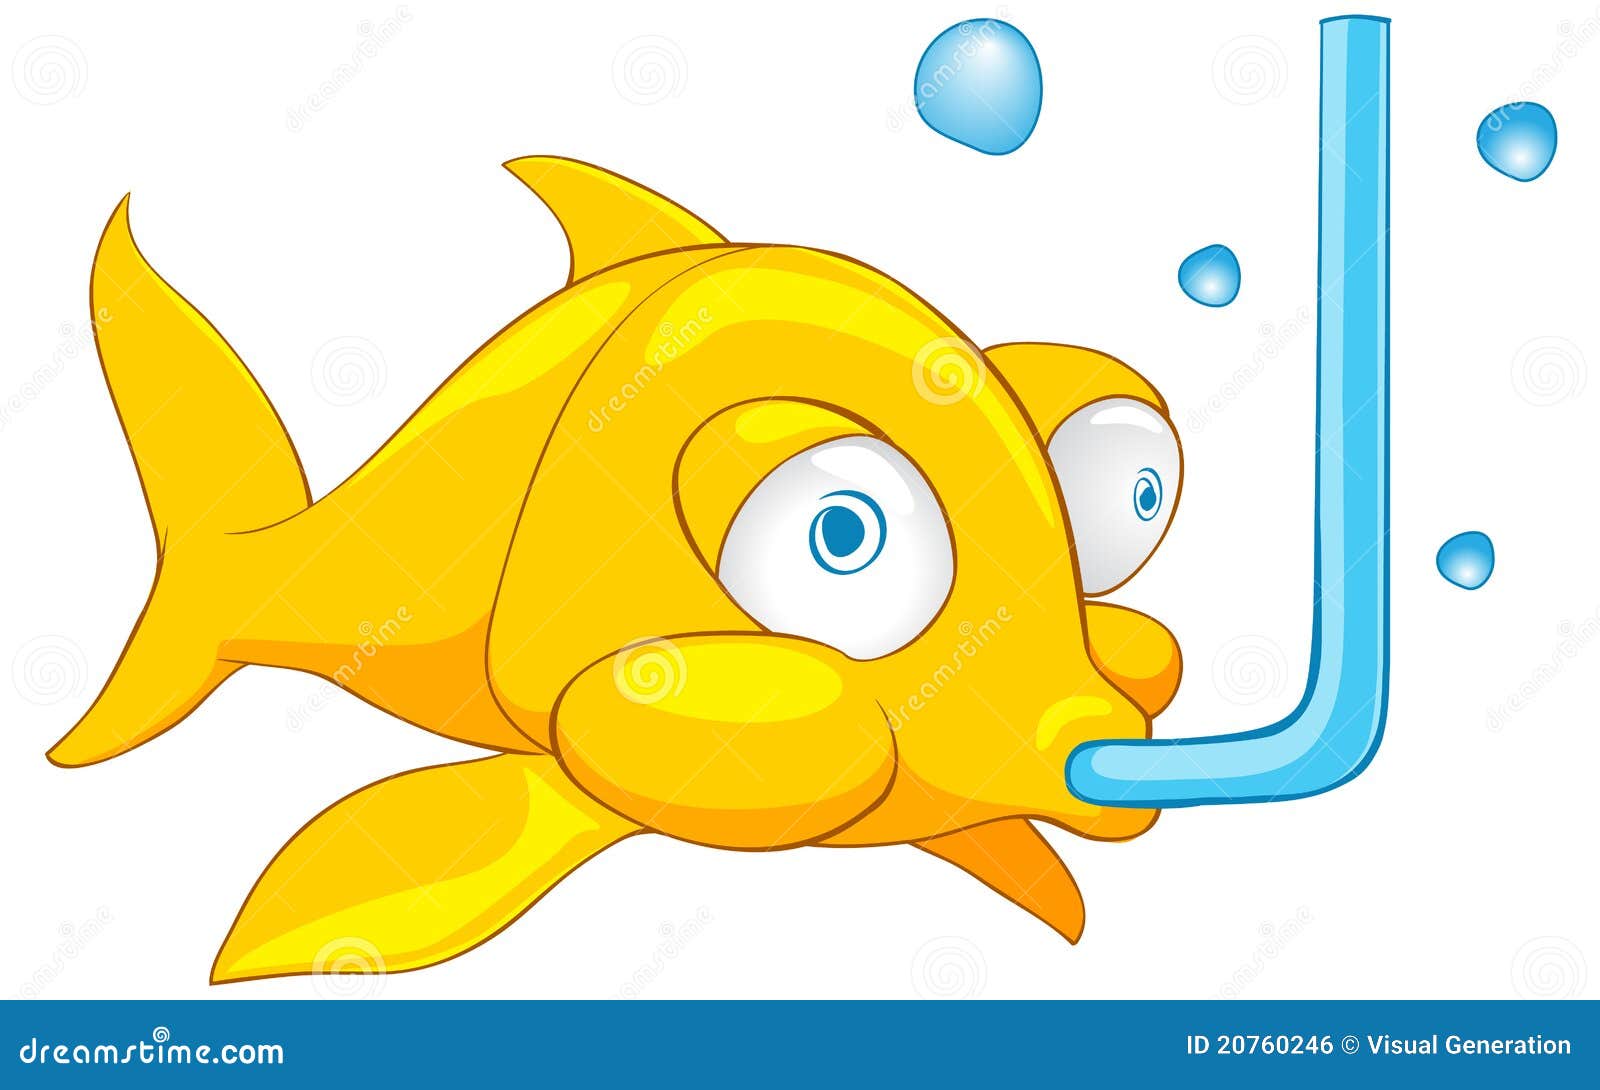 Cartoon Character Fish Royalty Free Stock Image - Image: 20760246